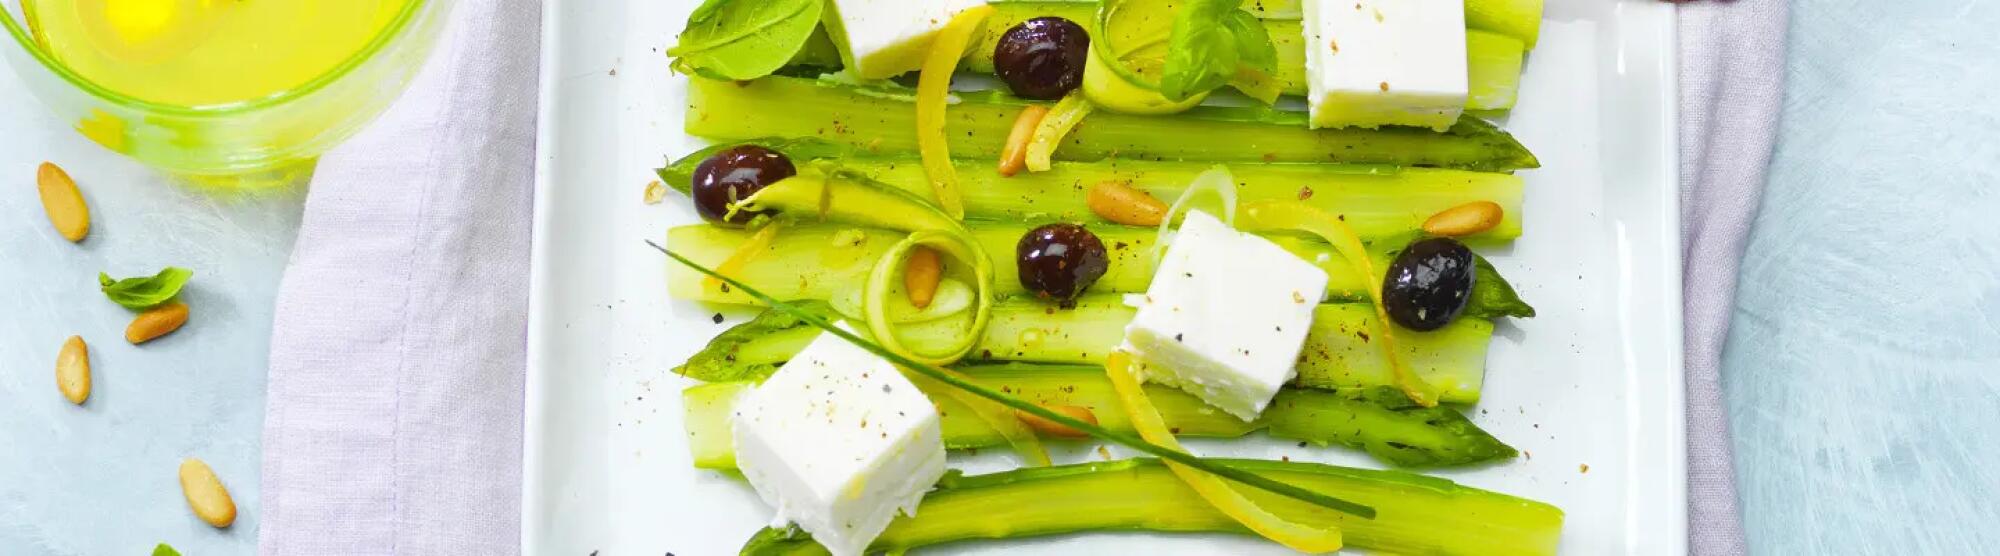 LA02_asperges-vertes-olives-carre-frais